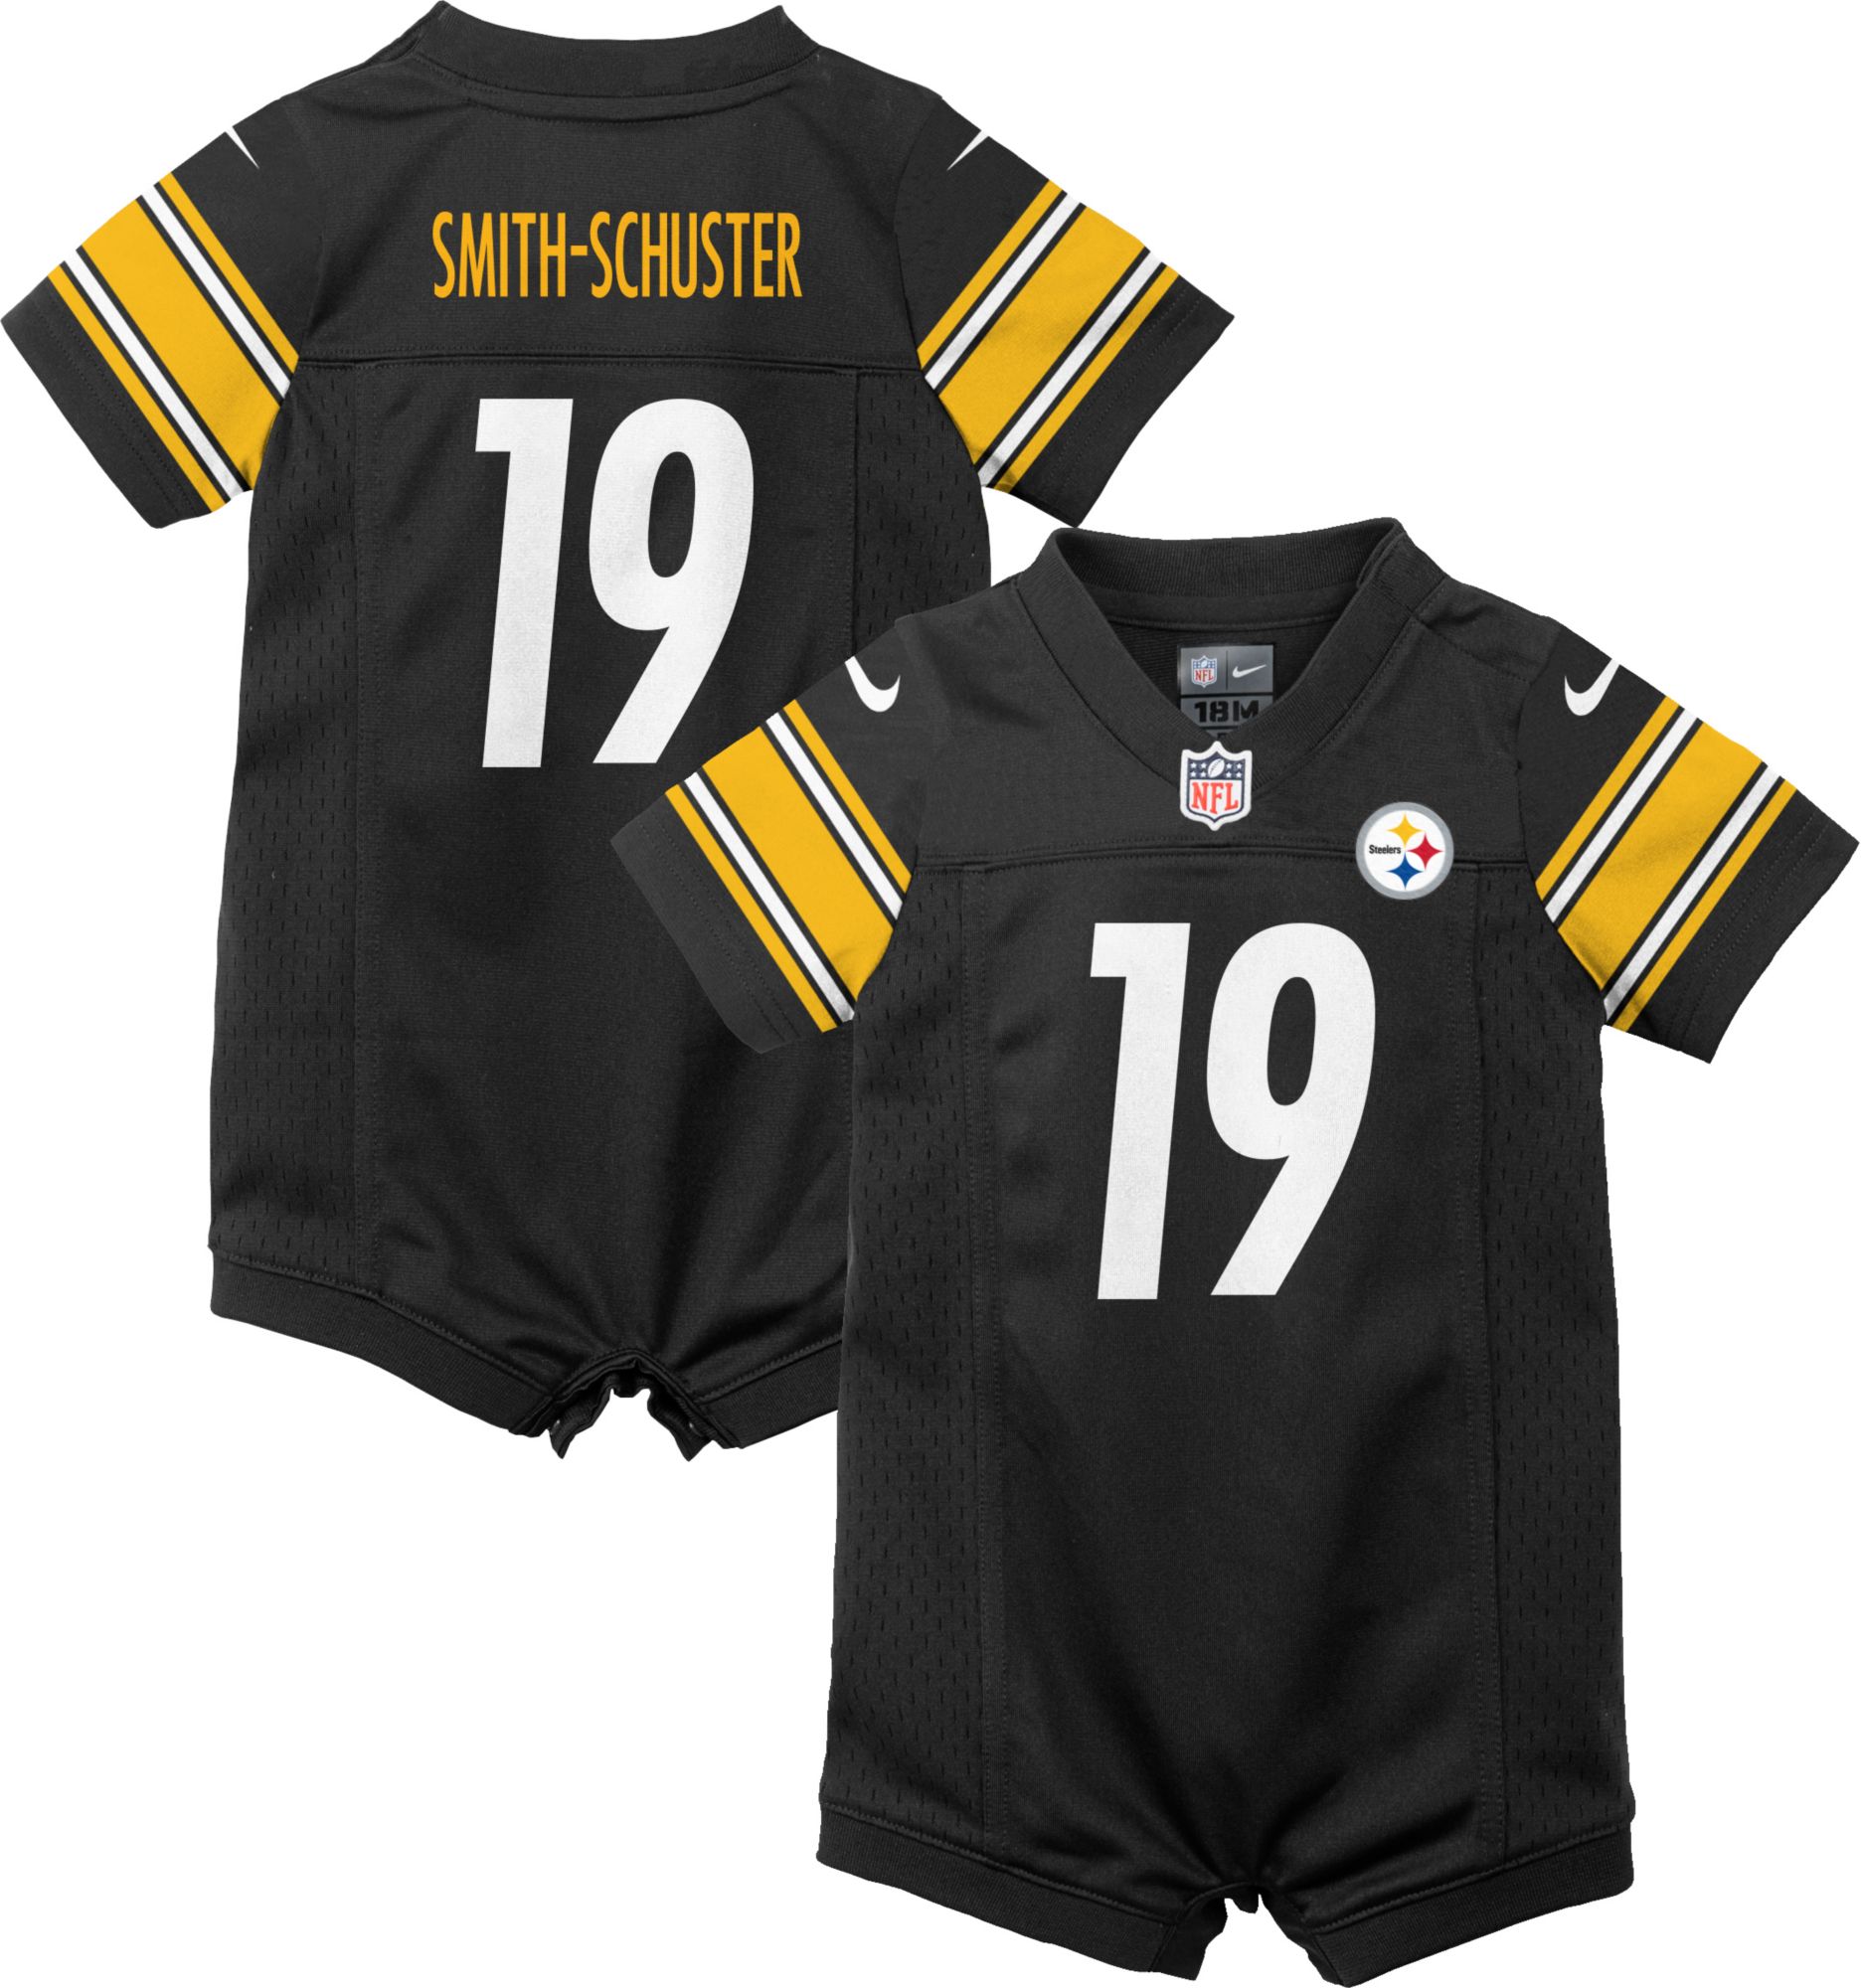 Pittsburgh Steelers Nike #19 Juju Smith-Schuster Replica Home Jersey